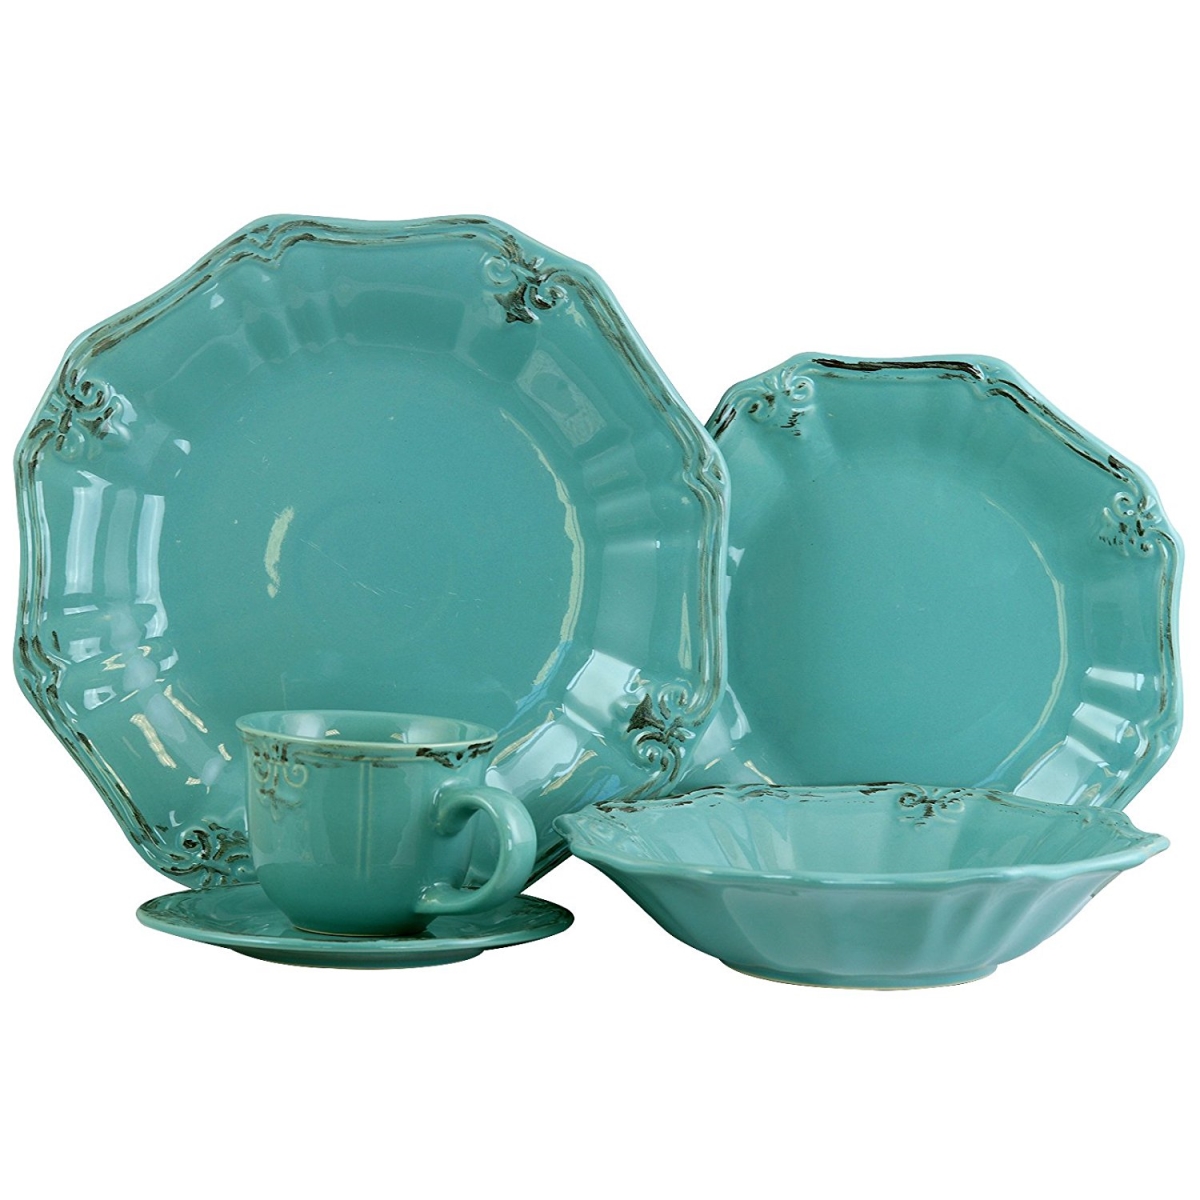 Elm-fleurdelys-turquoise Fleur De Lys 20-piece Dinnerware Set In Turquoise